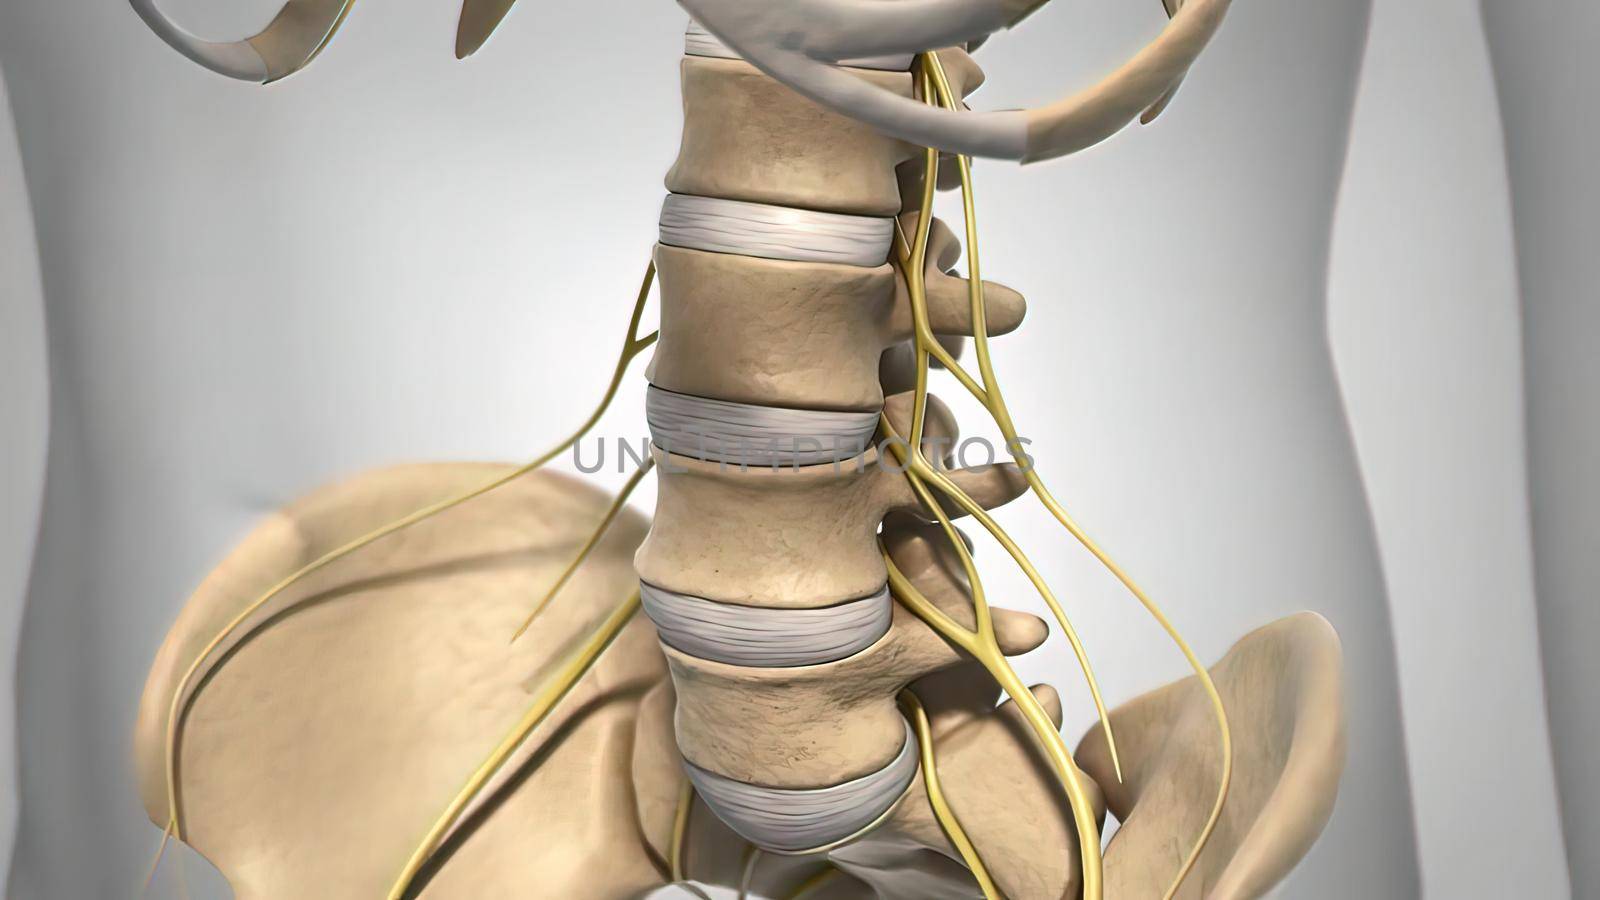 Spinal cord, disc and nervous system 3D illustration